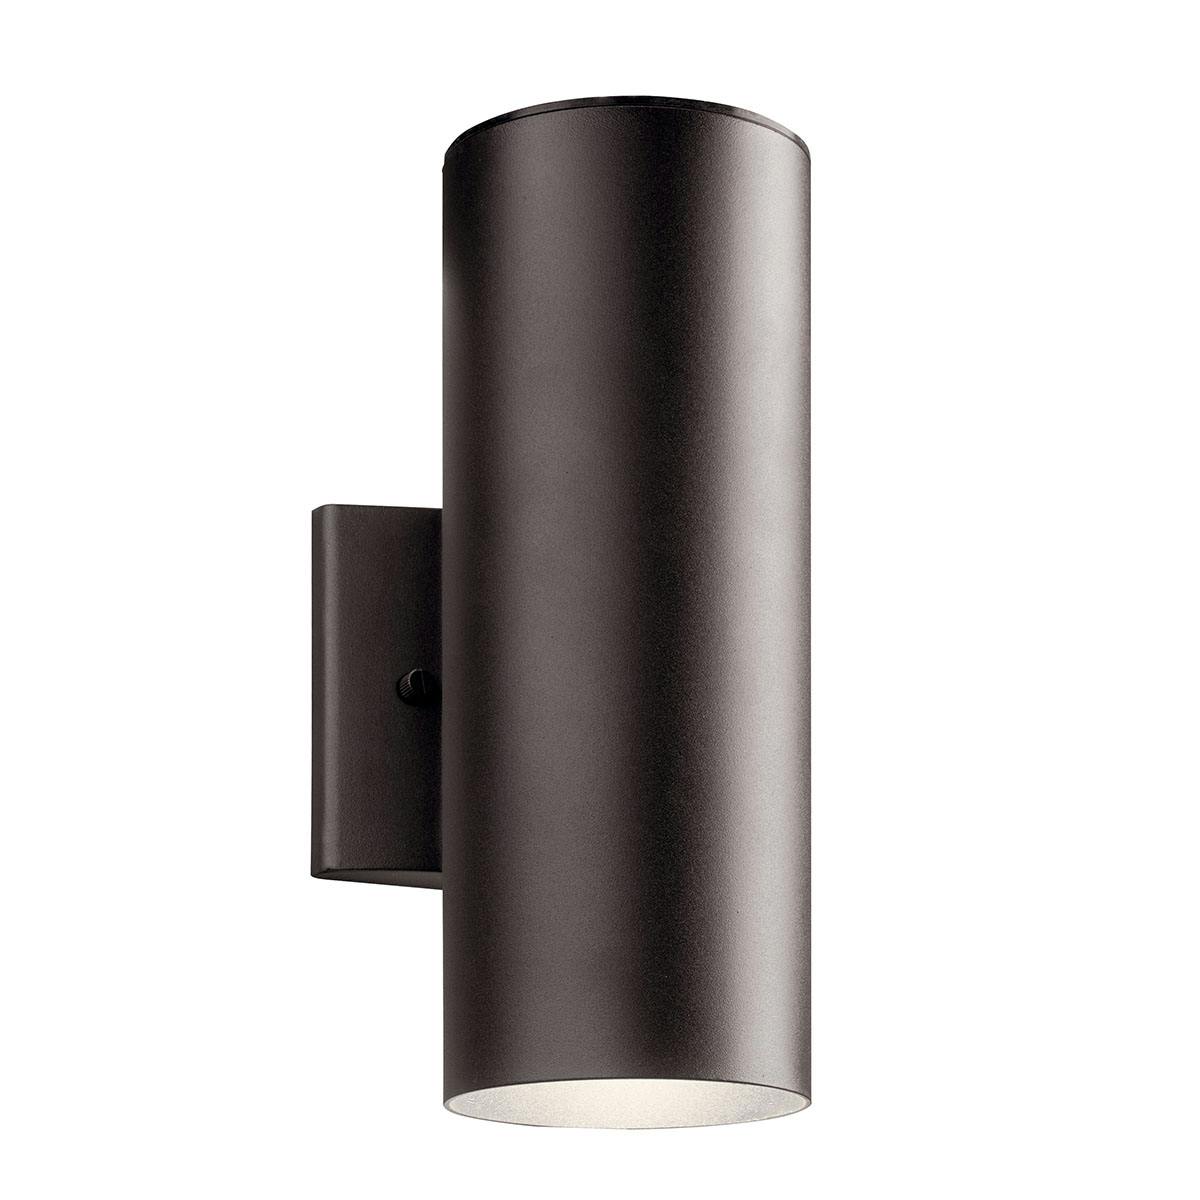 Cylinder 3000K LED 12" Wall Light Bronze on a white background